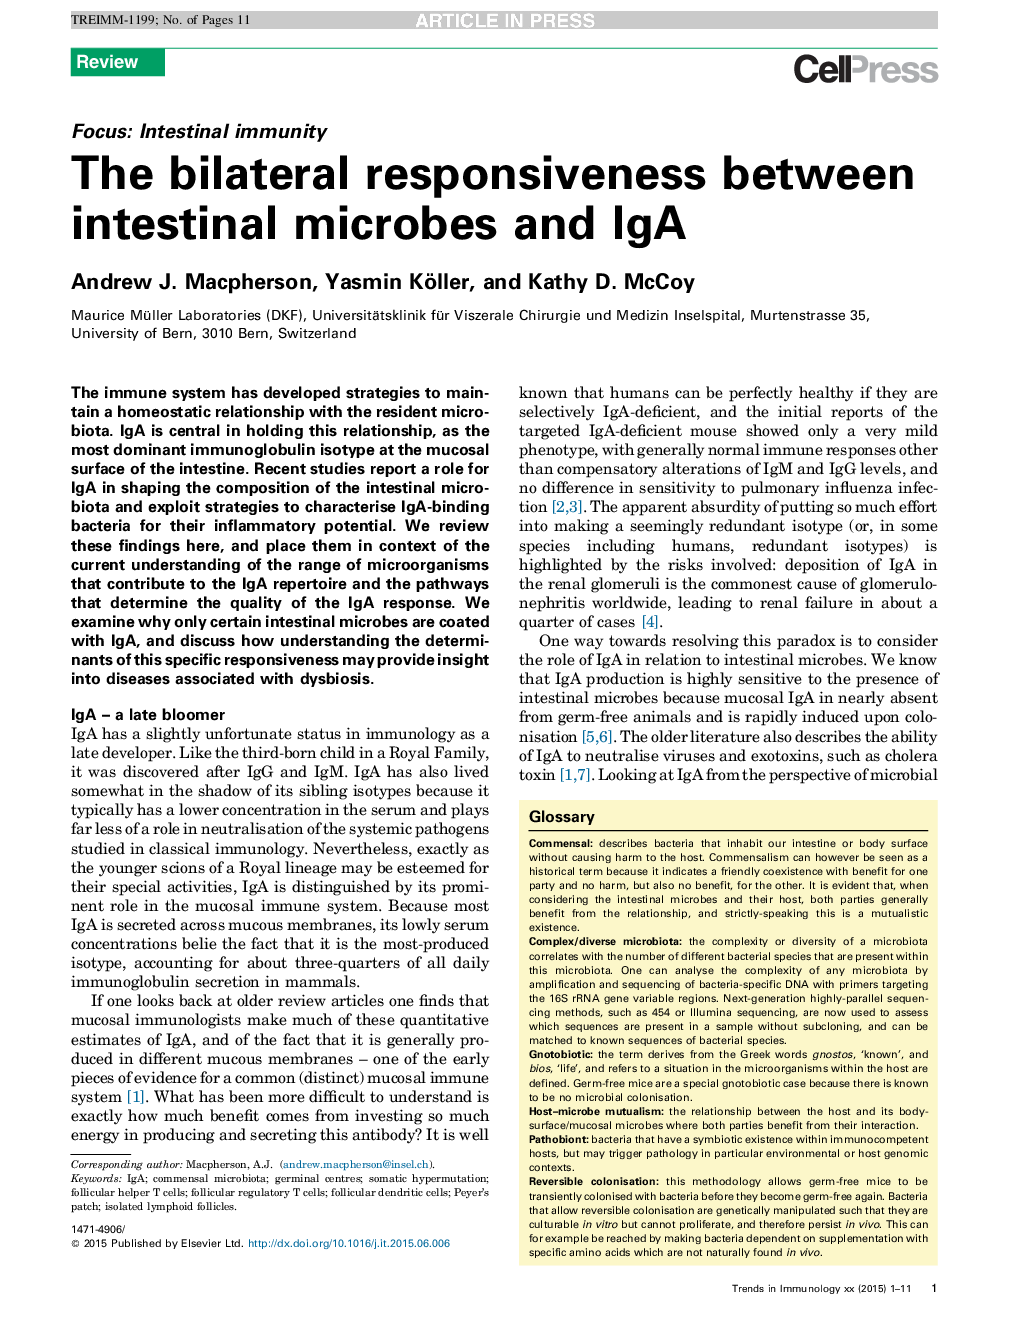 The bilateral responsiveness between intestinal microbes and IgA